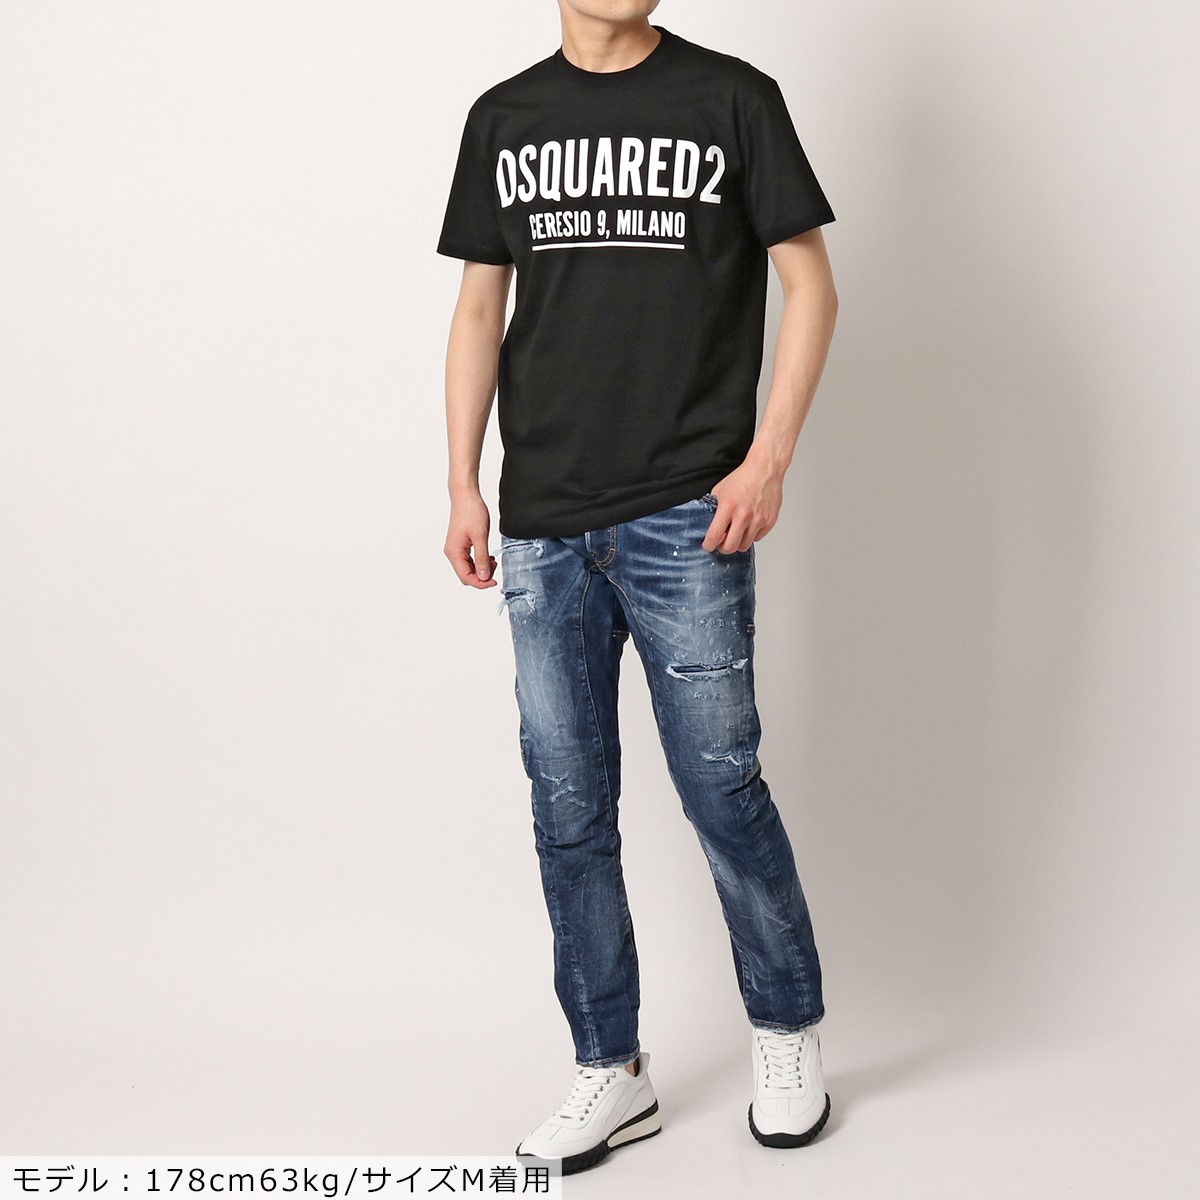 DSQUARED2 ディースクエアード 半袖 Tシャツ Ceresio9 Cool T-Shirt S71GD1058 S23009 メンズ  カットソー クルーネック ロゴT コットン 900 | インポートセレクト musee